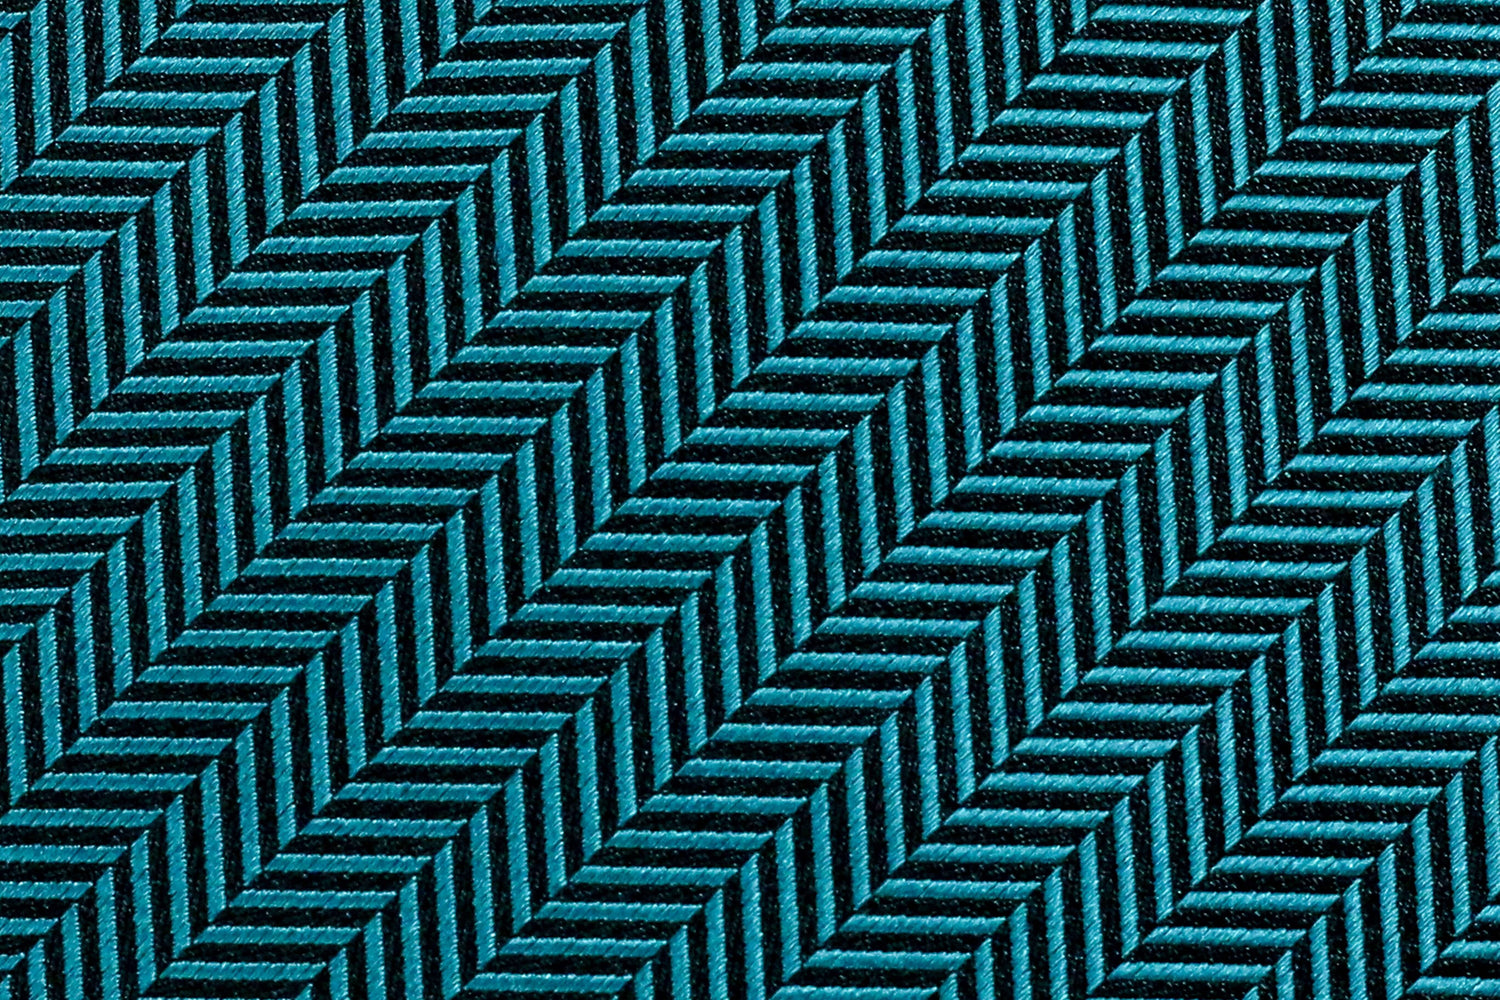 Solid Teal Herringbone silk fabric detail zoom shot